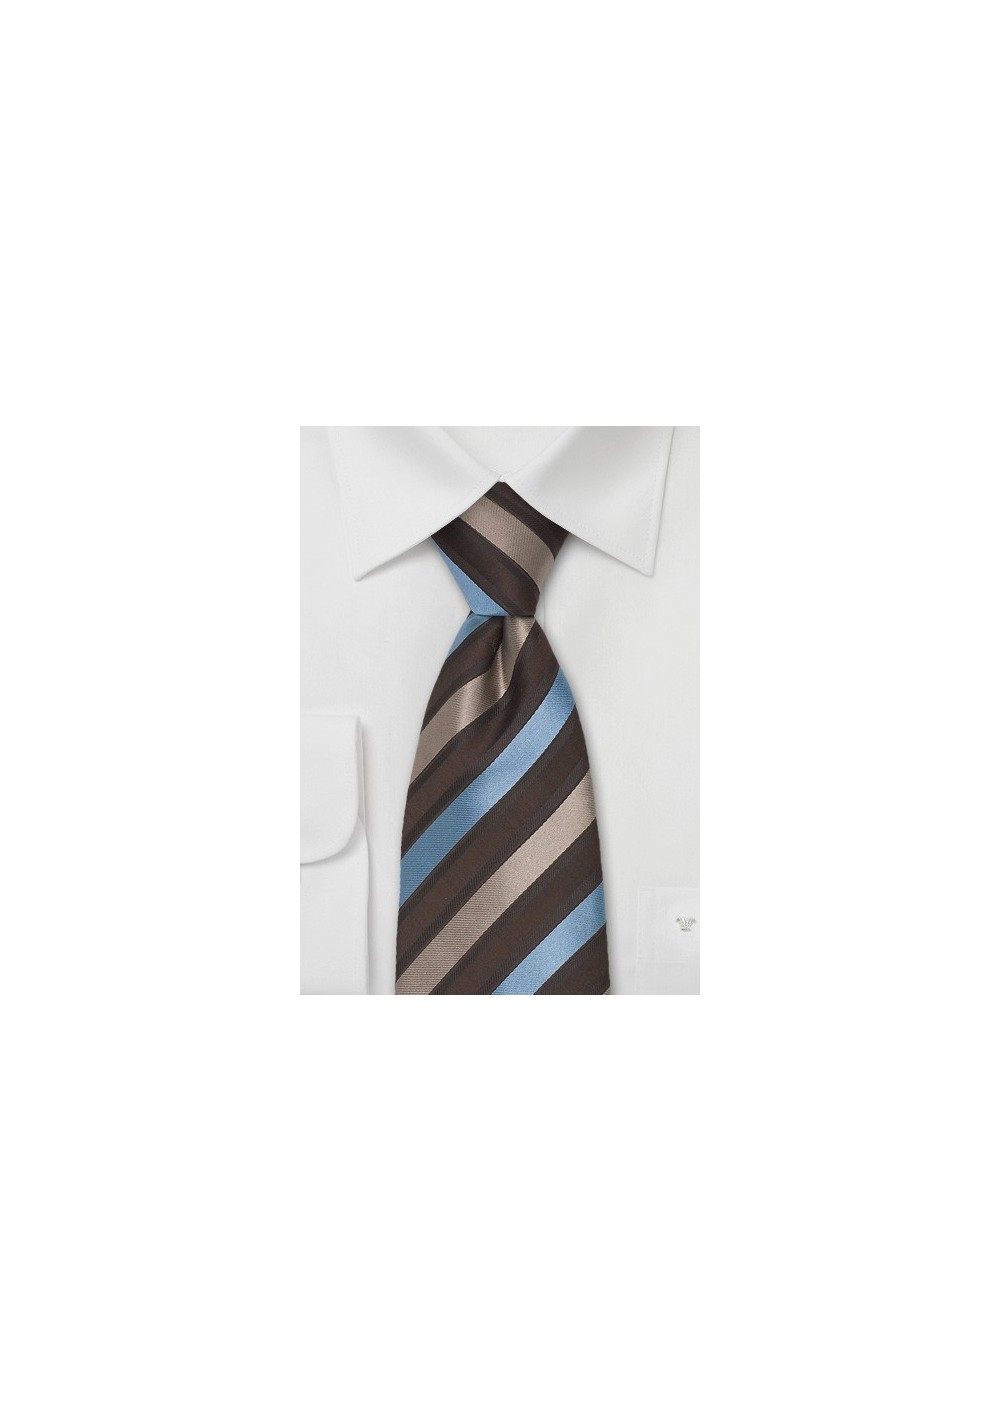 Elegant Mens Tie in Brown, Tan, and Light Blue